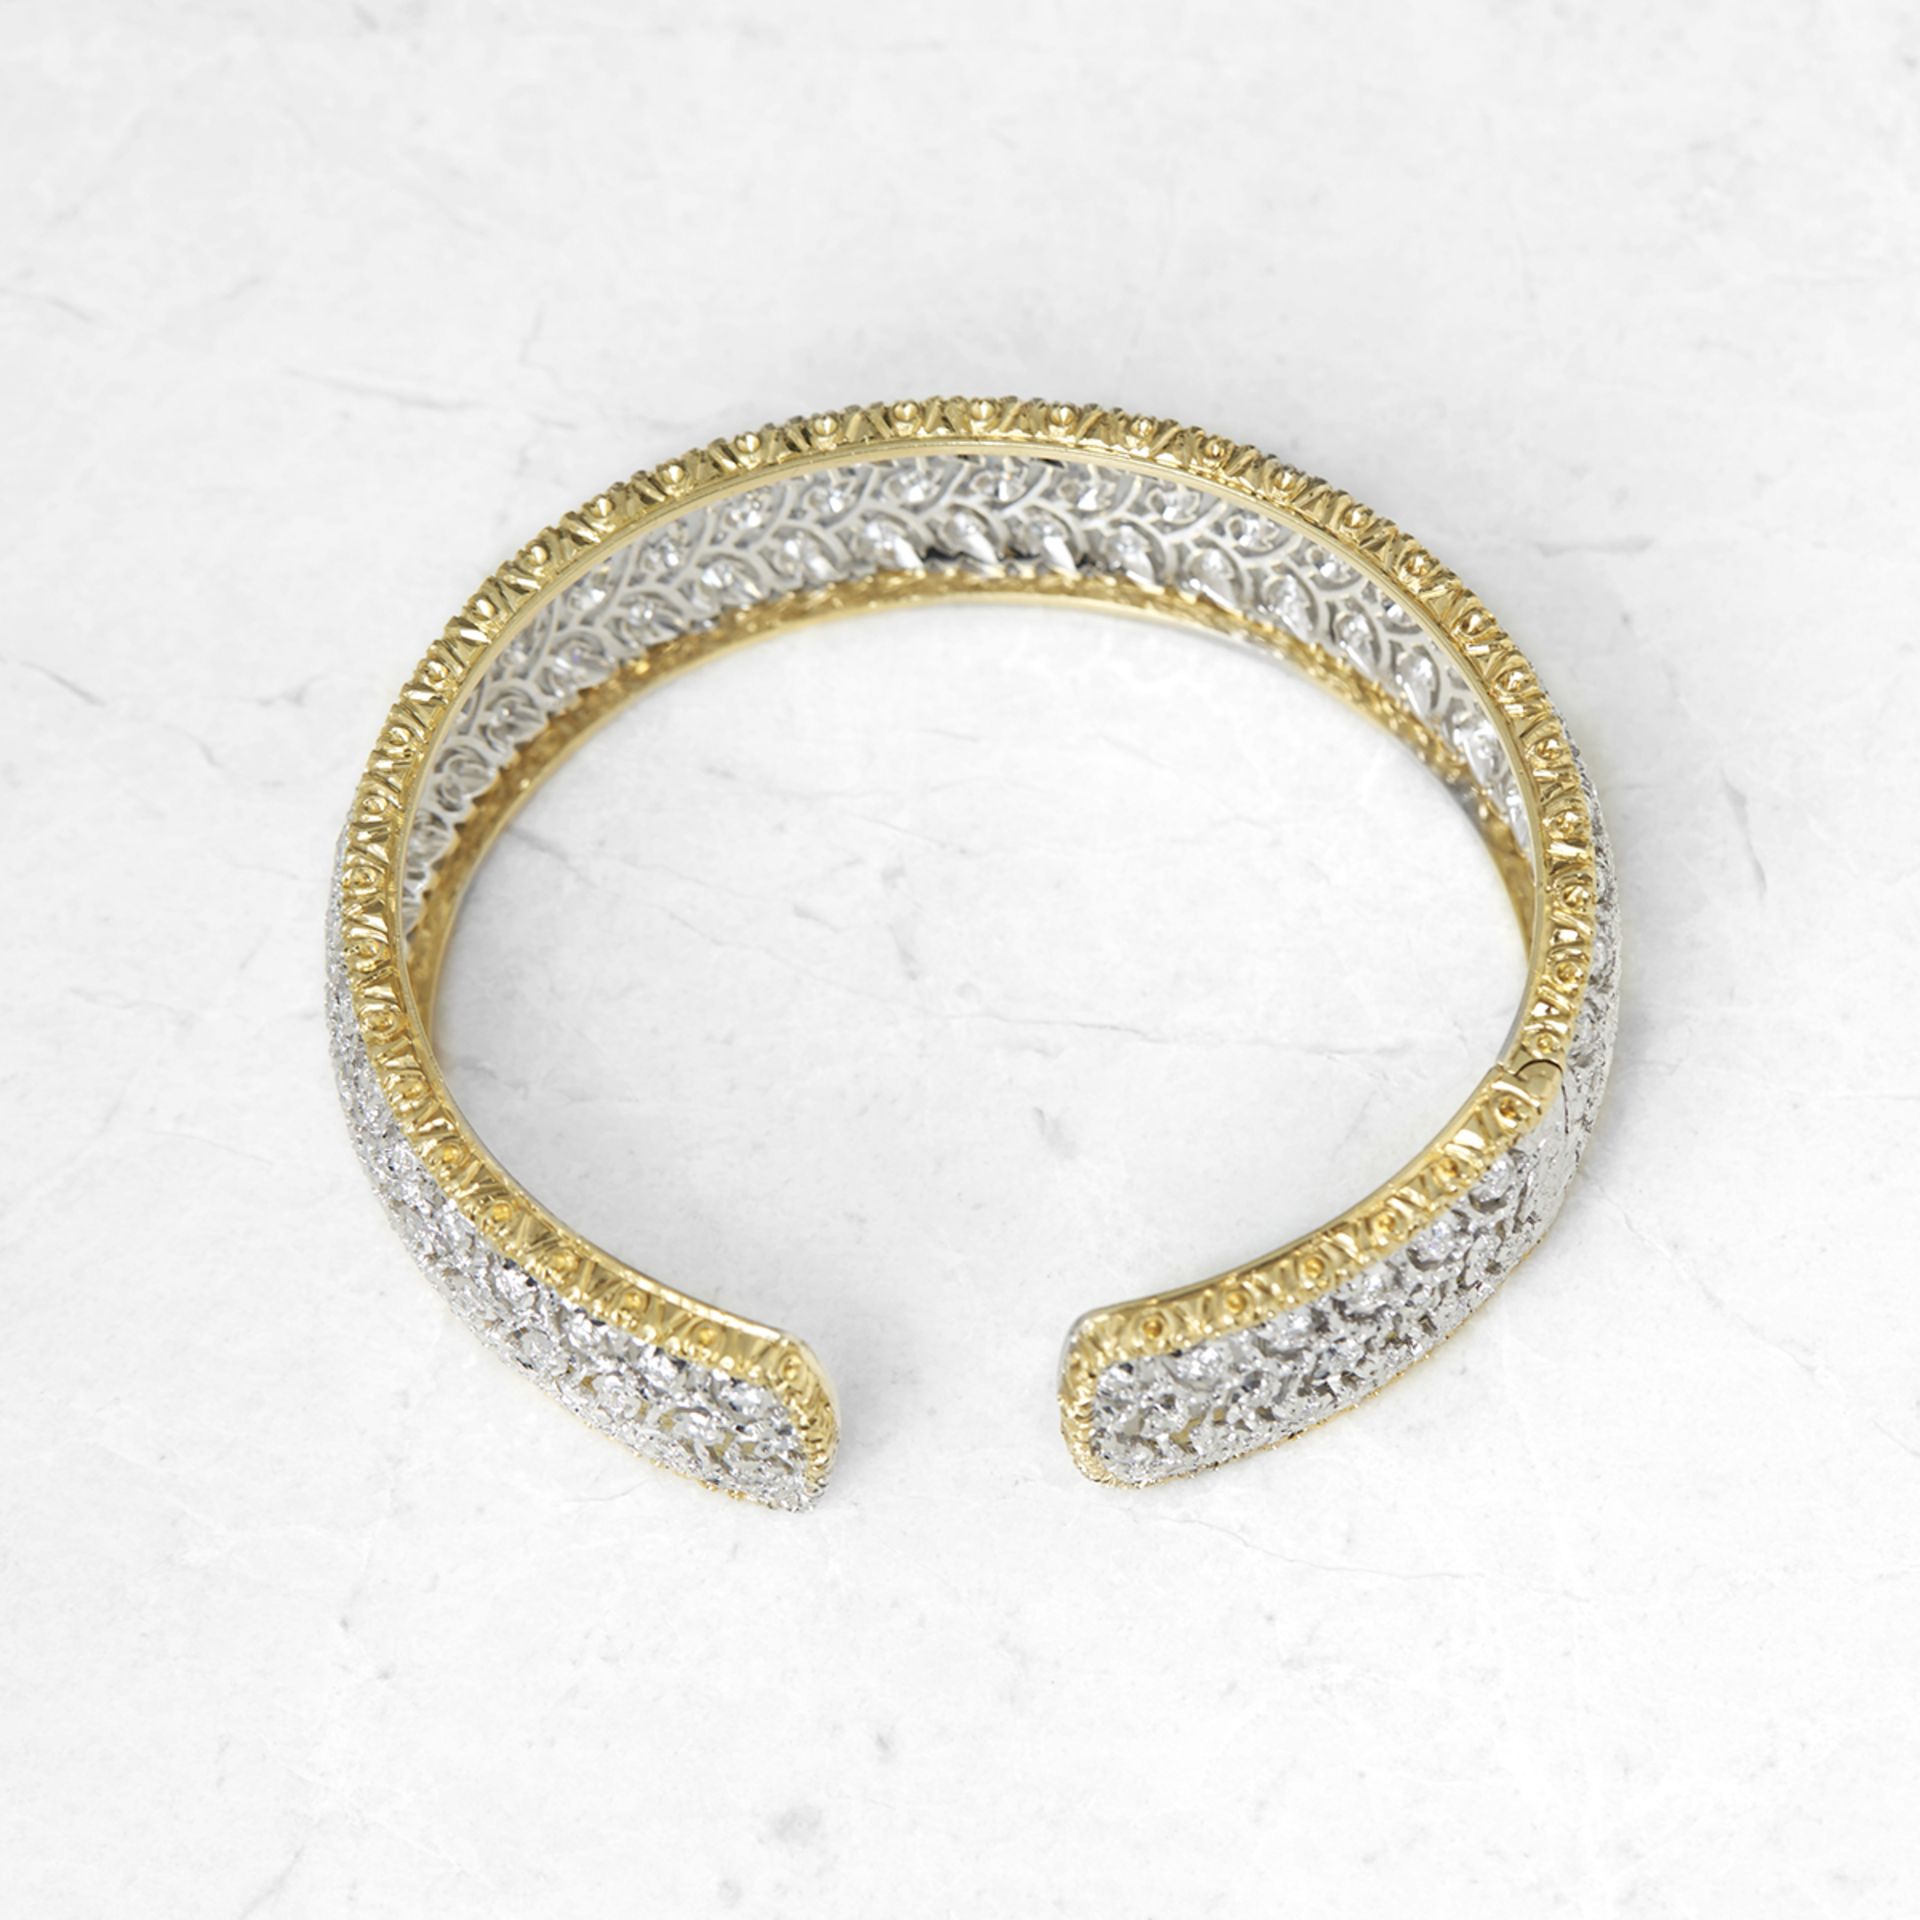 Buccellati 18k White & Yellow Gold 5.00ct Diamond Cuff Bracelet - Image 8 of 8